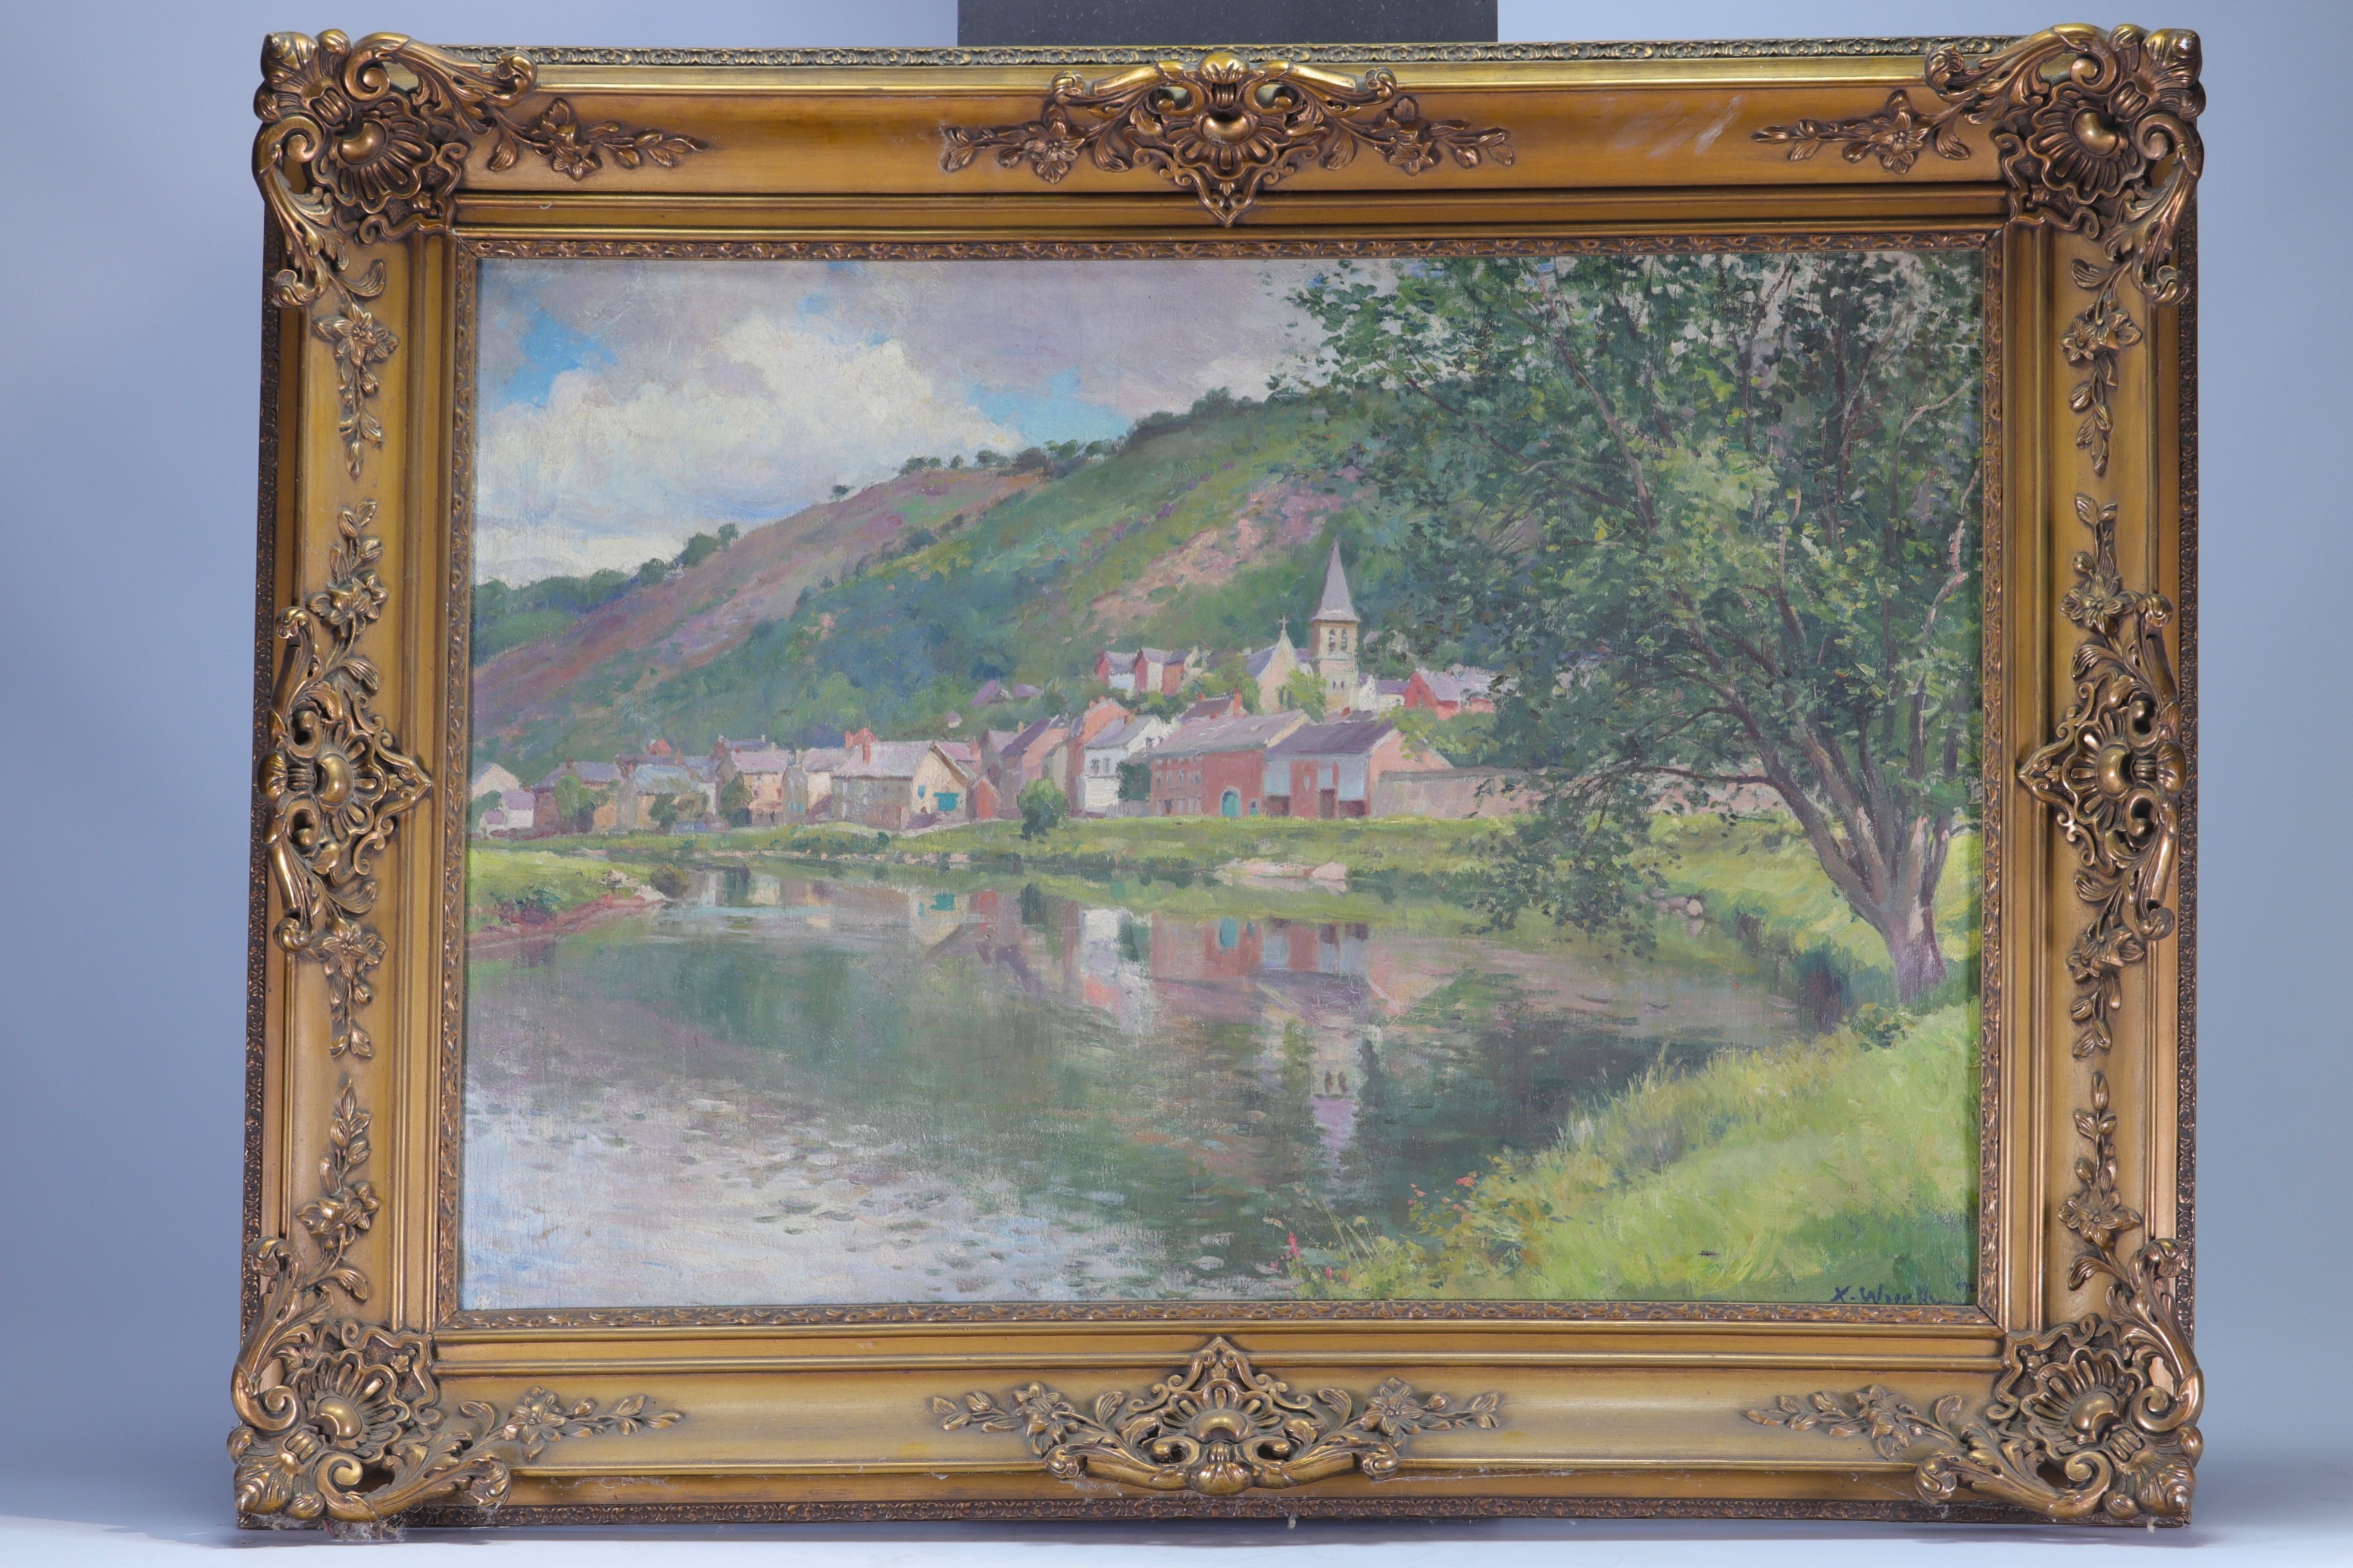 Xavier WURTH (1869-1933) Oil on canvas "Bord de Meuse" (Meuse river bank) - Image 2 of 2